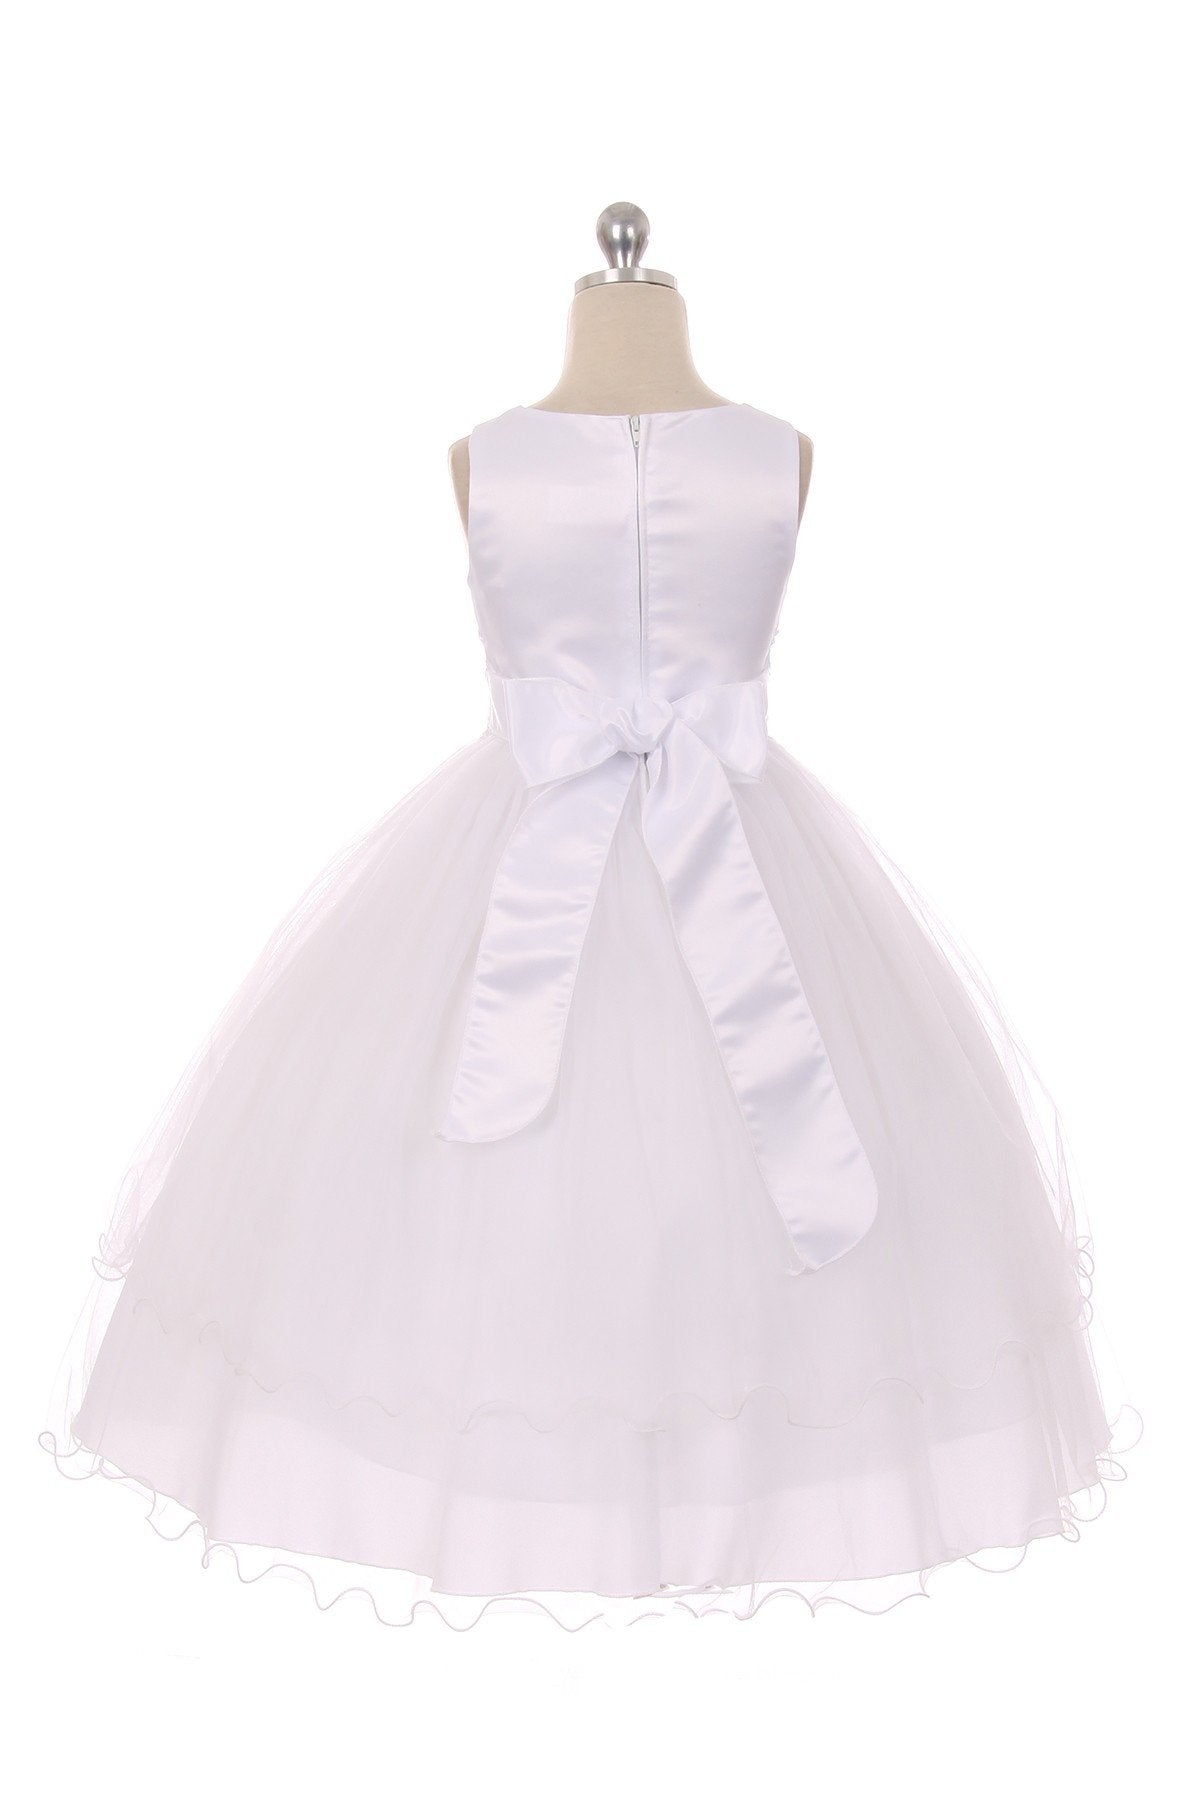 Dress - Lace Trim Long Tulle Plus Size Girl Dress